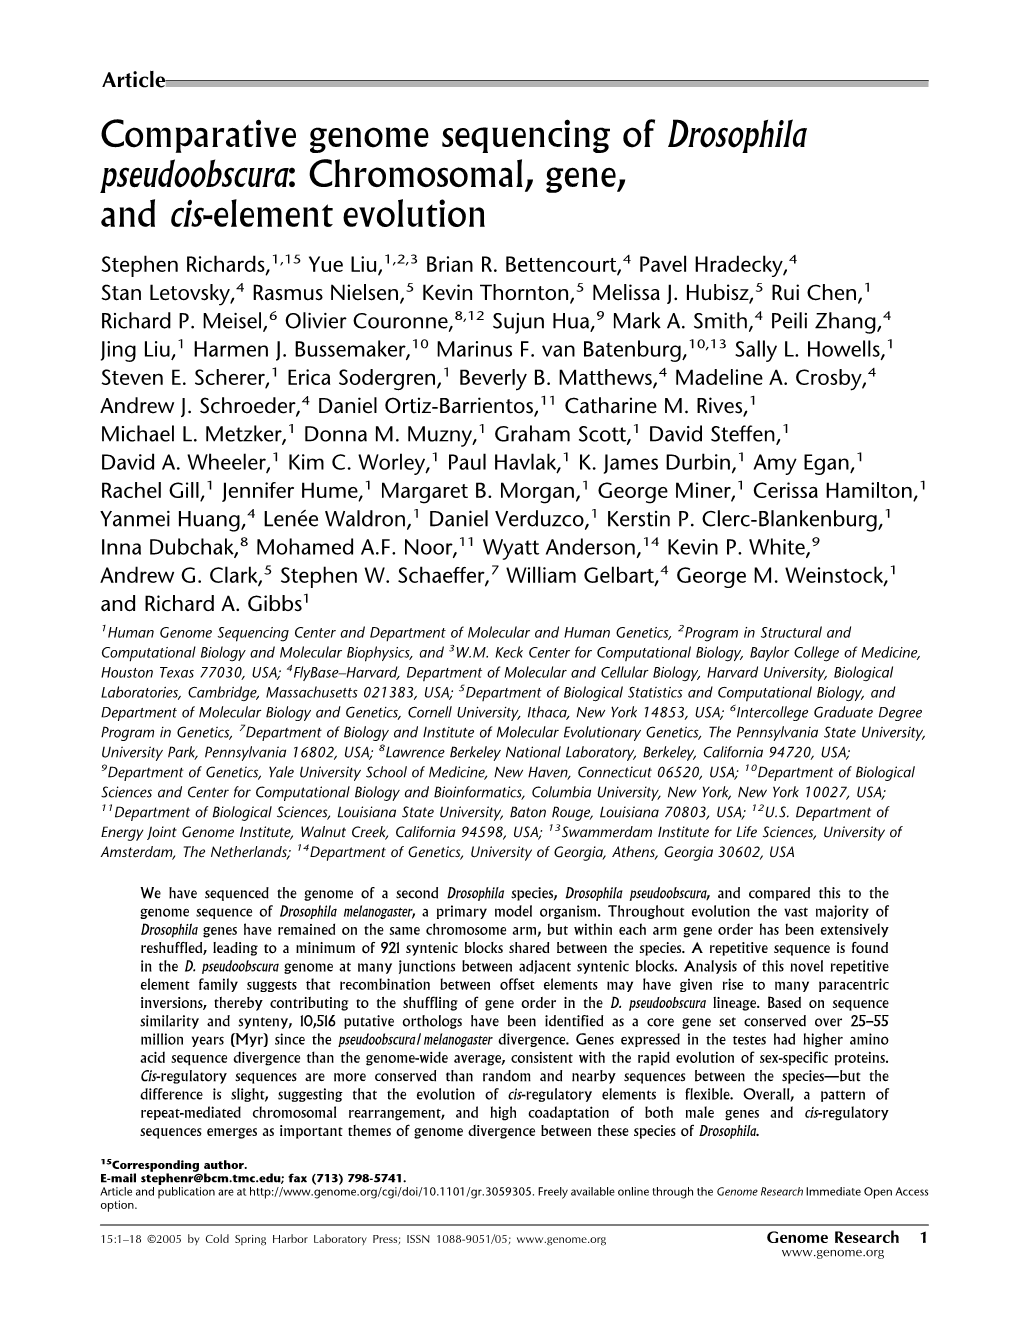 Comparative Genome Sequencing of Drosophila Pseudoobscura: Chromosomal, Gene, and Cis-Element Evolution